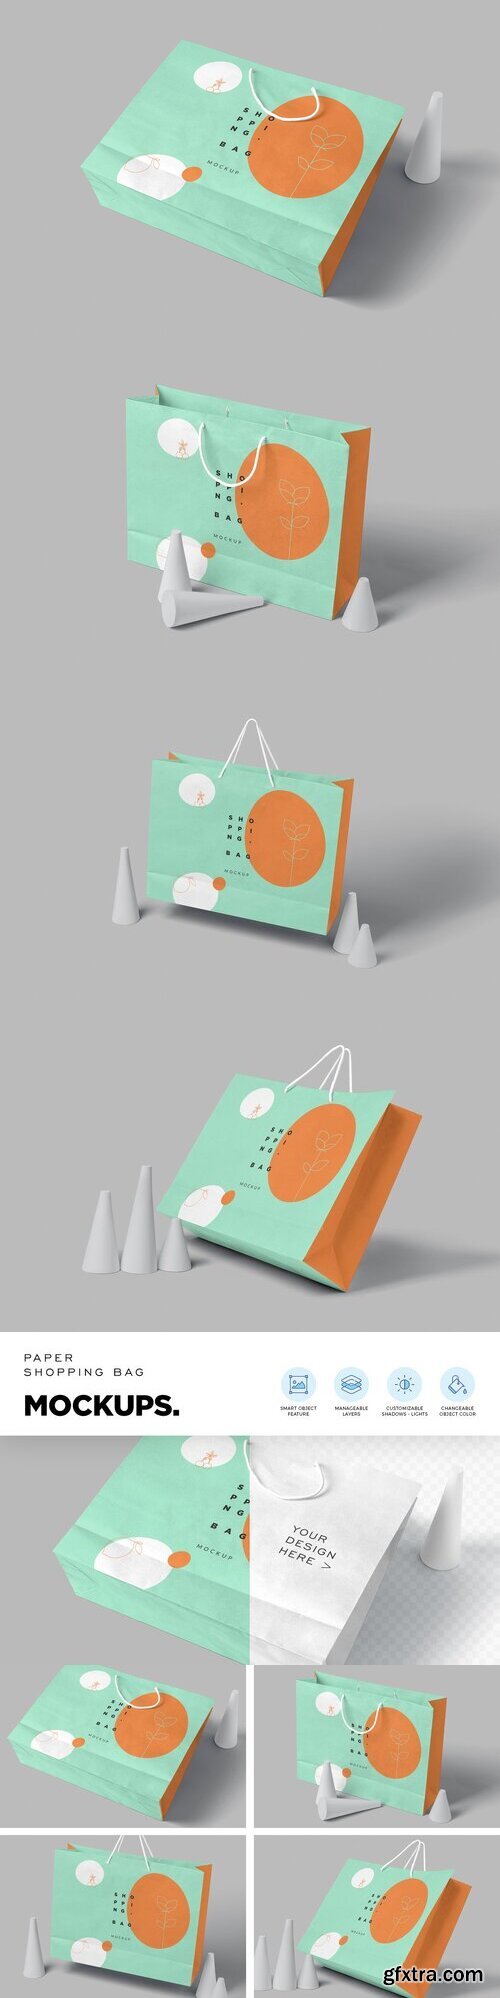 CreativeMarket - 4 Paper Shopping Bag Mockups 6704224